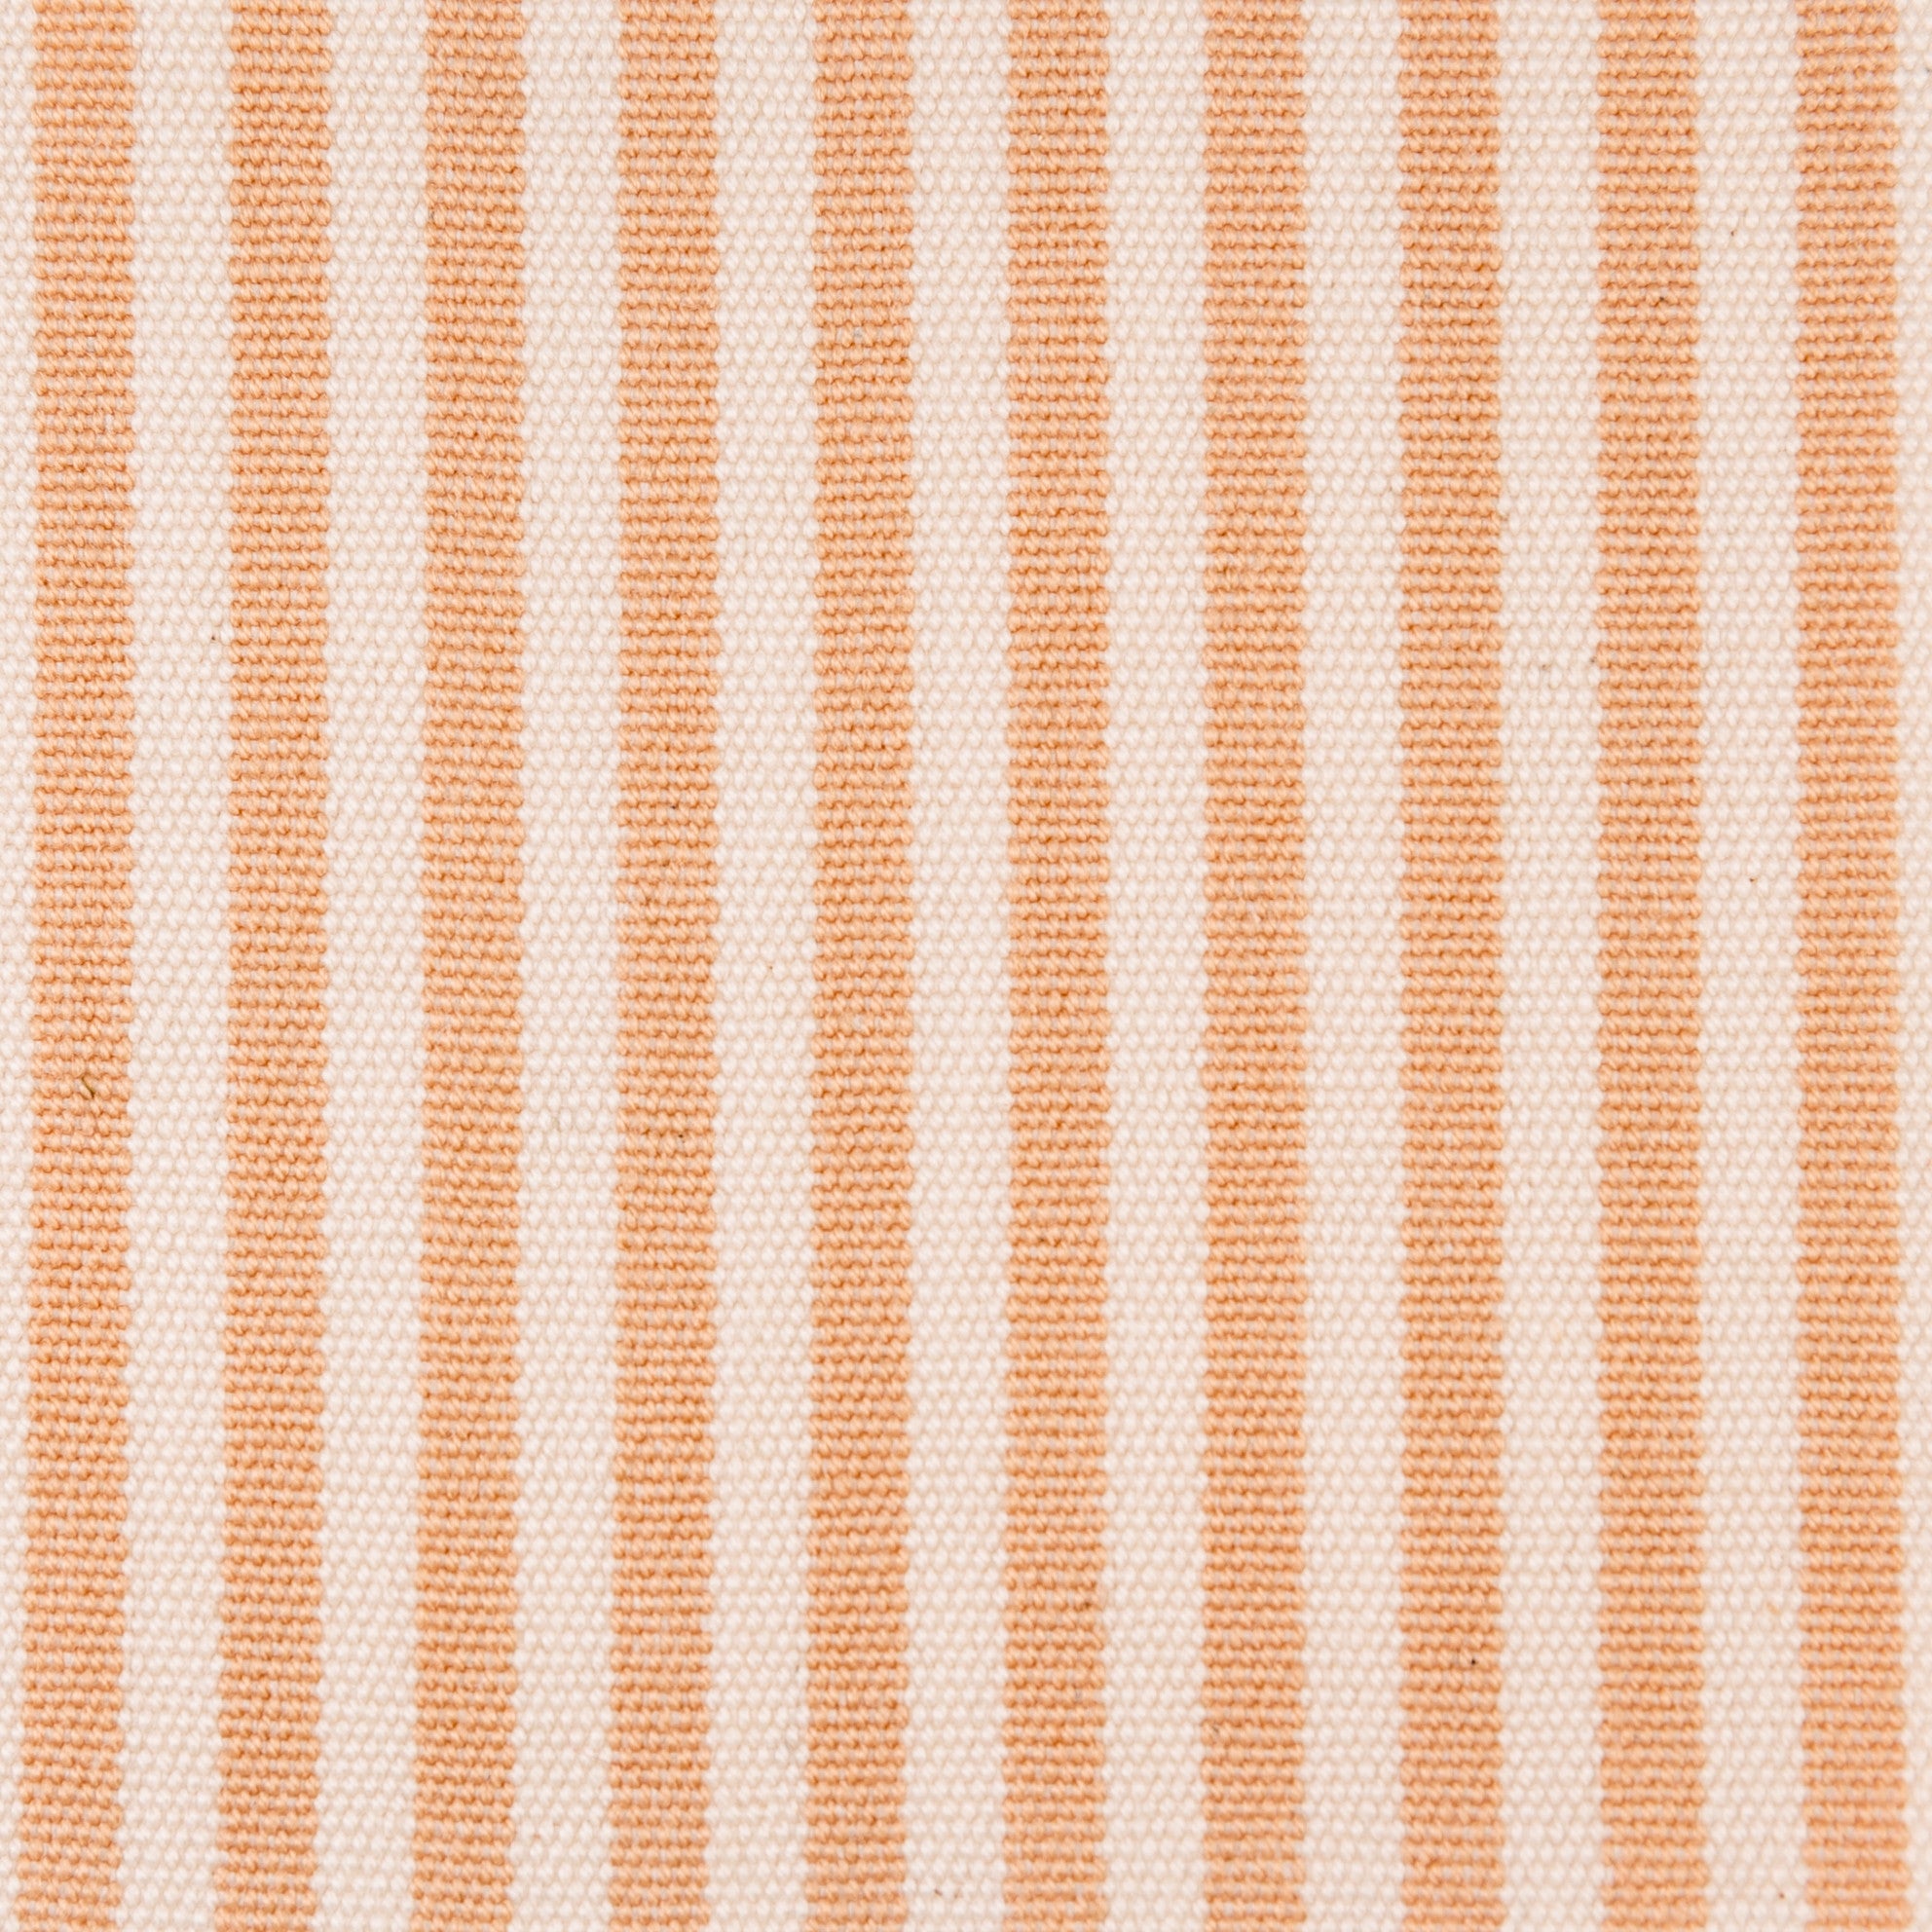 Woven Striped Fabric - Bude 02/48 Trade Winds | Nicholas Engert Interiors